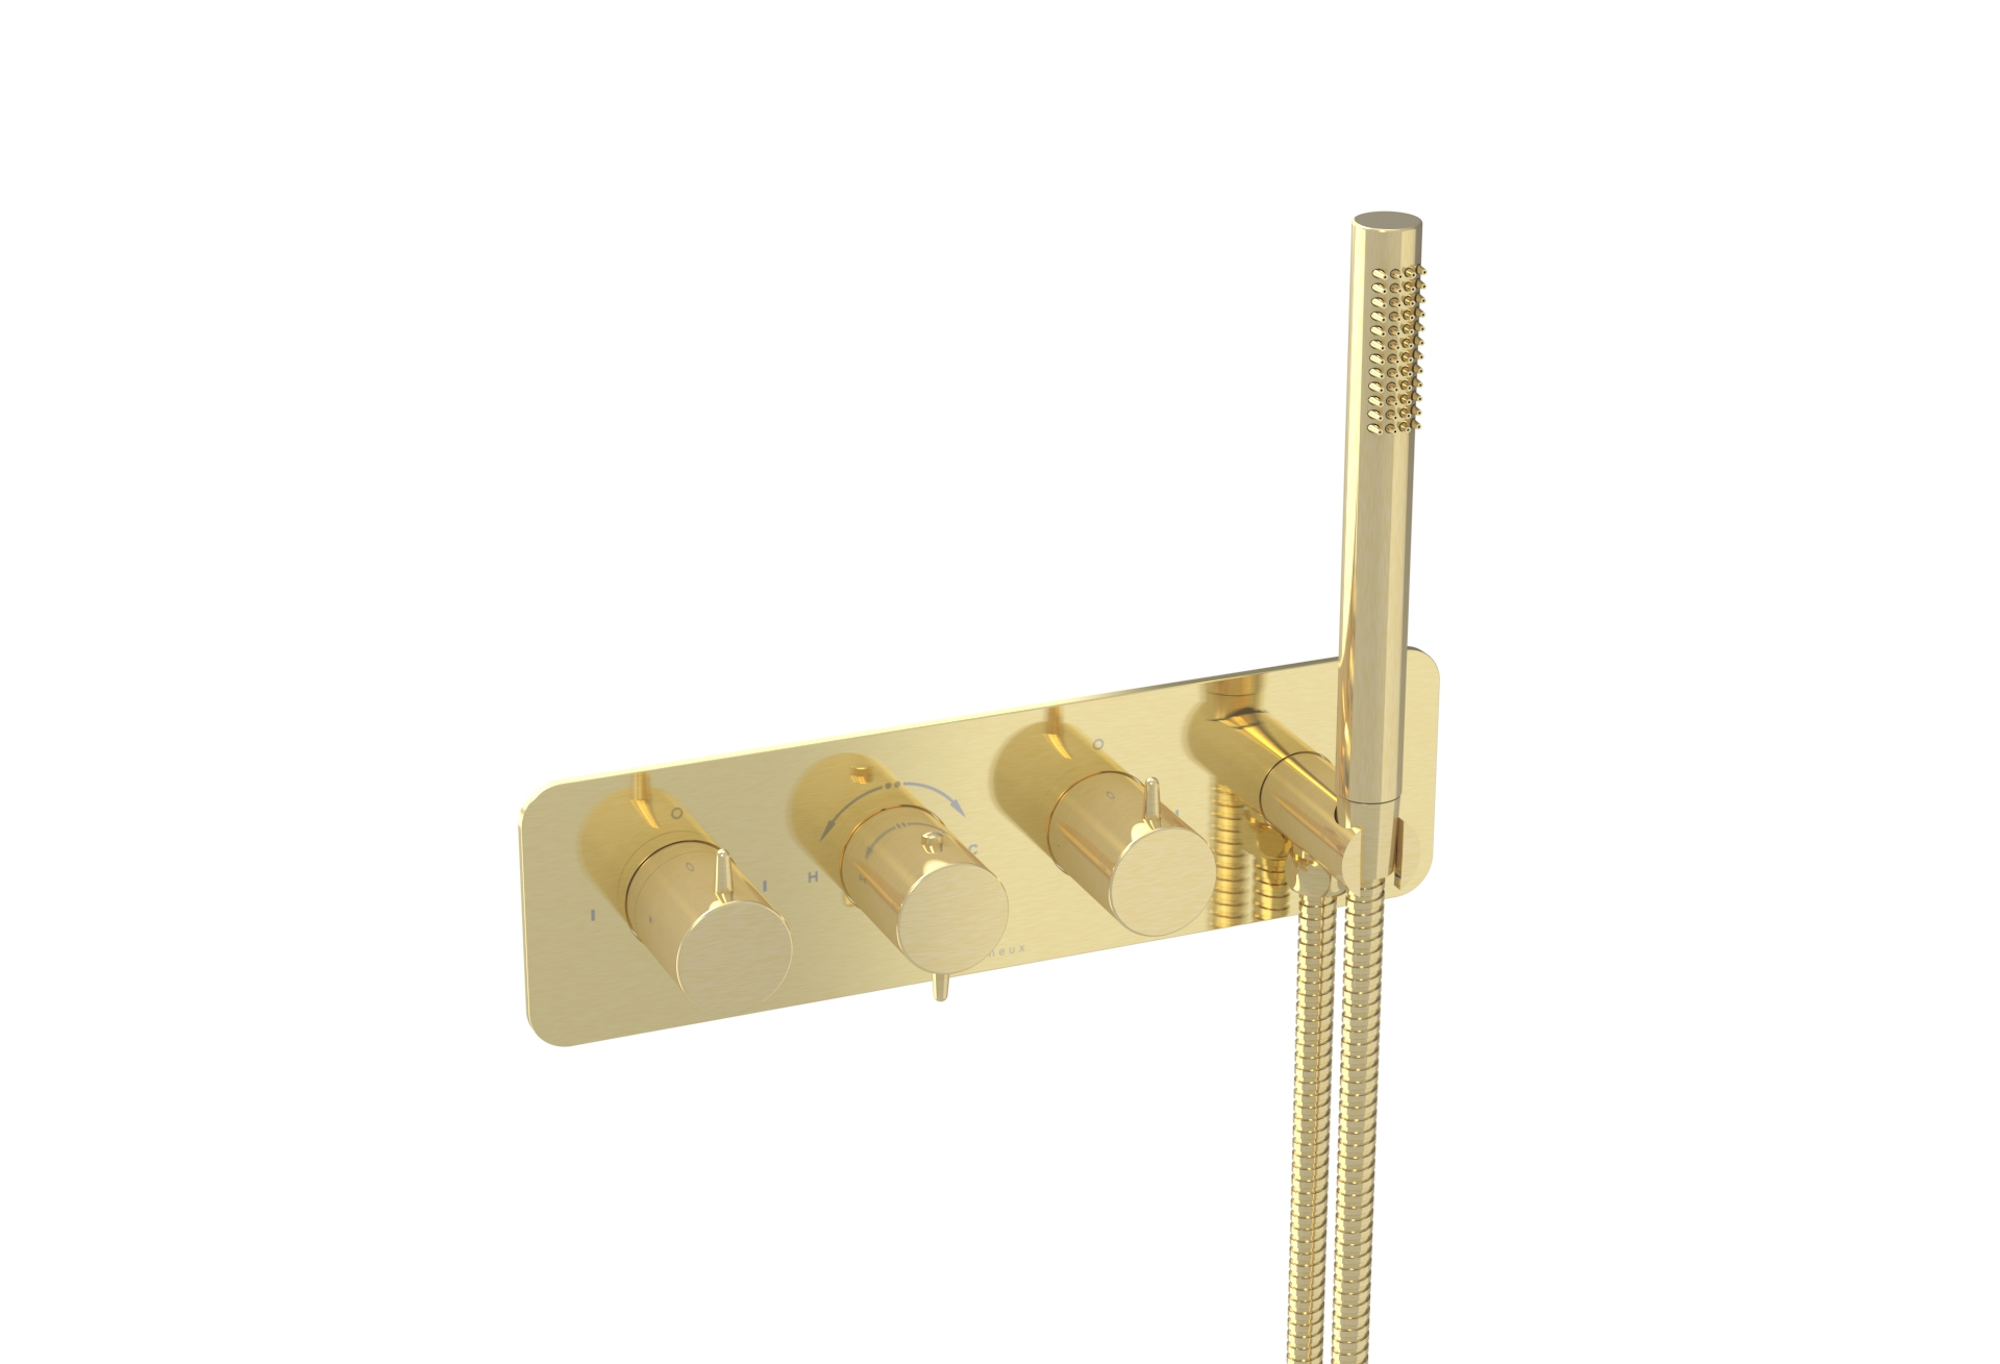 EDEN 3 way thermostatic shower valve kit in landscape with handspray - Brushed Brass